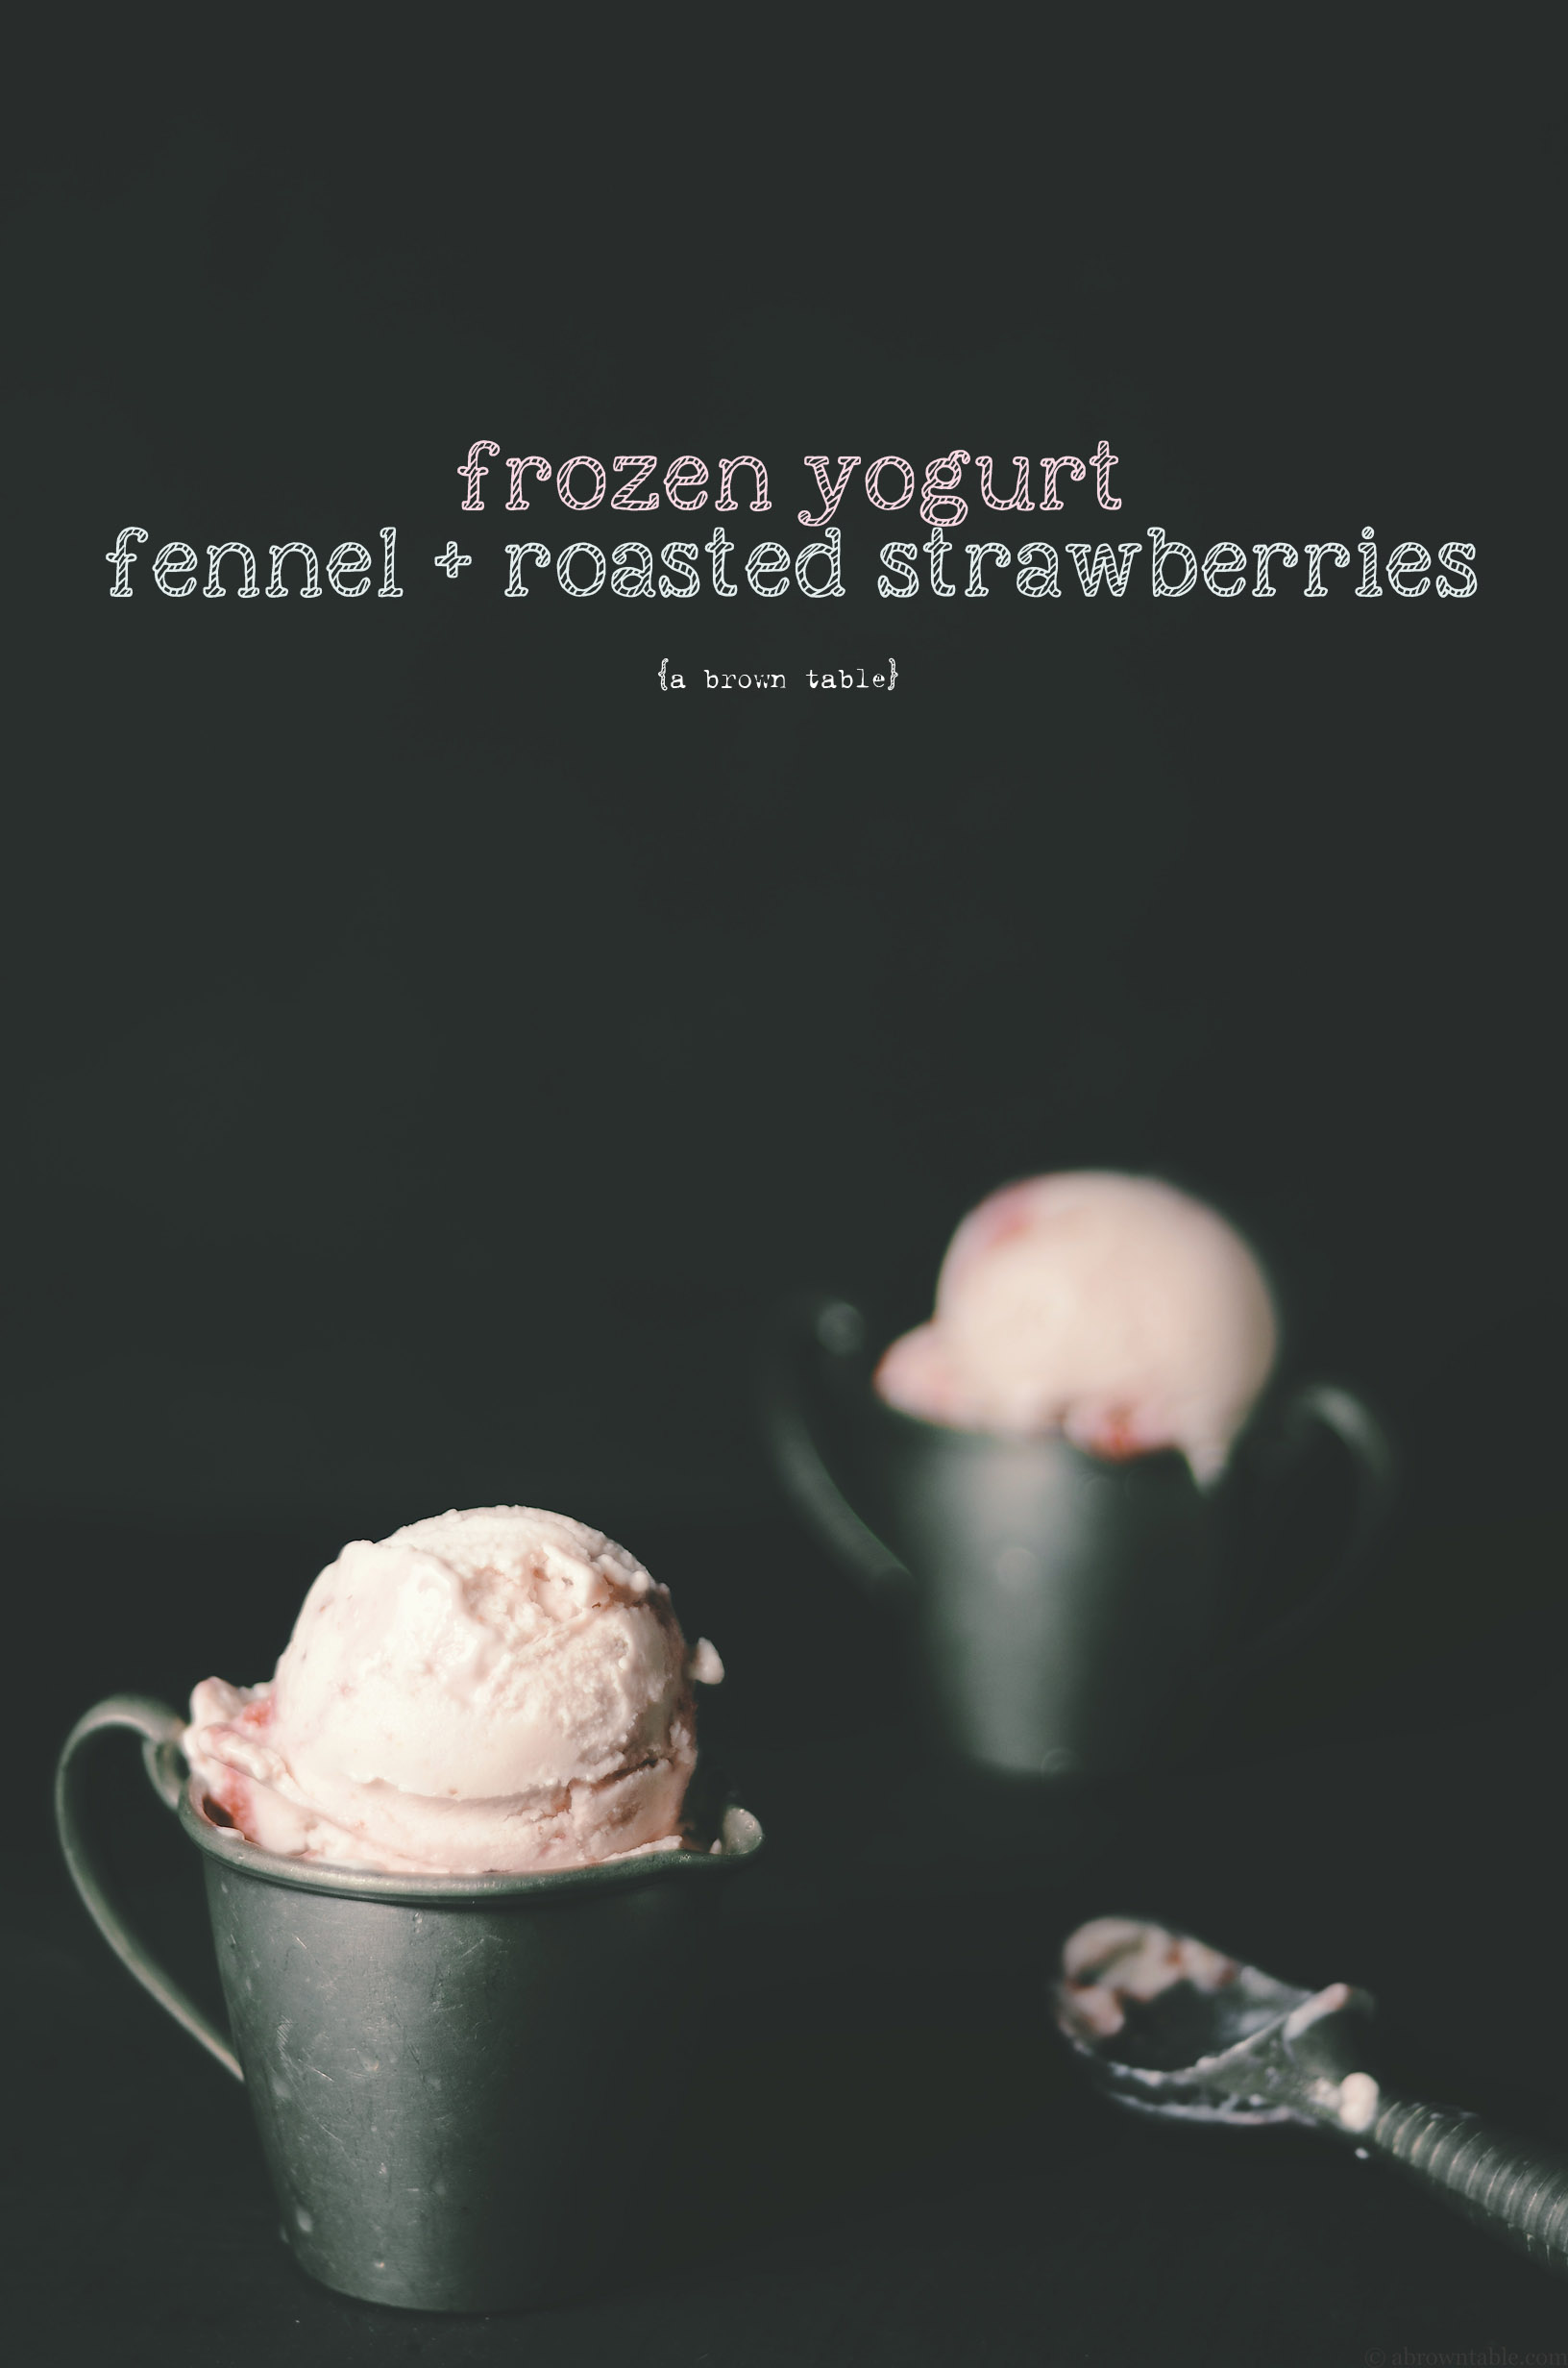 fennel strawberries frozen yogurt